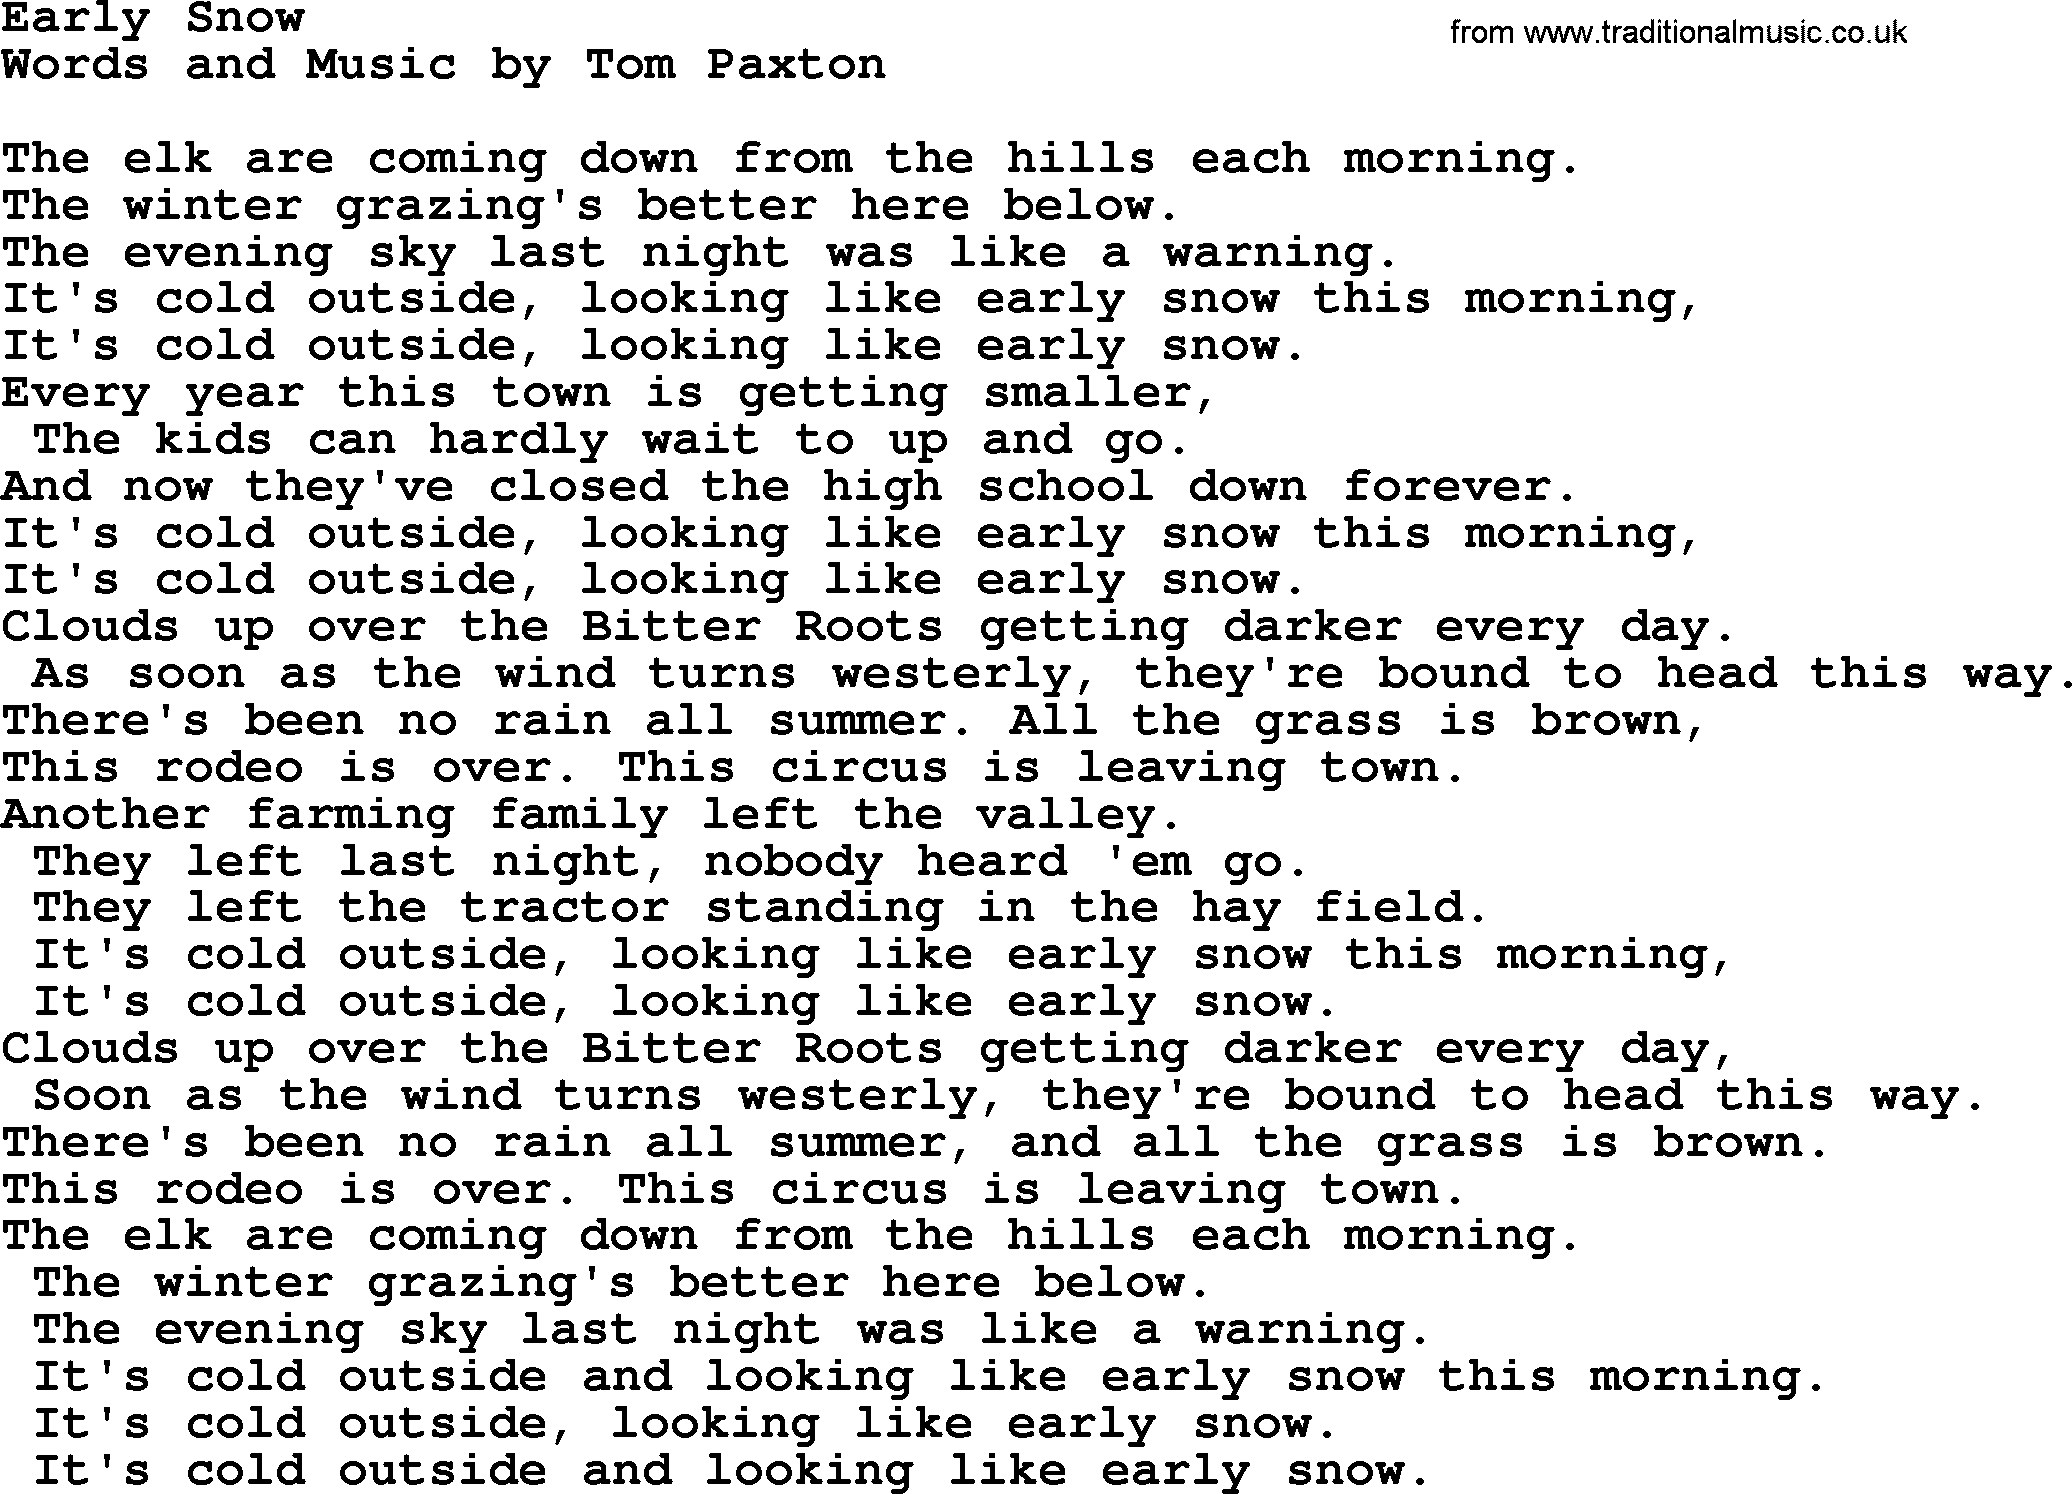 Tom Paxton song: Early Snow, lyrics